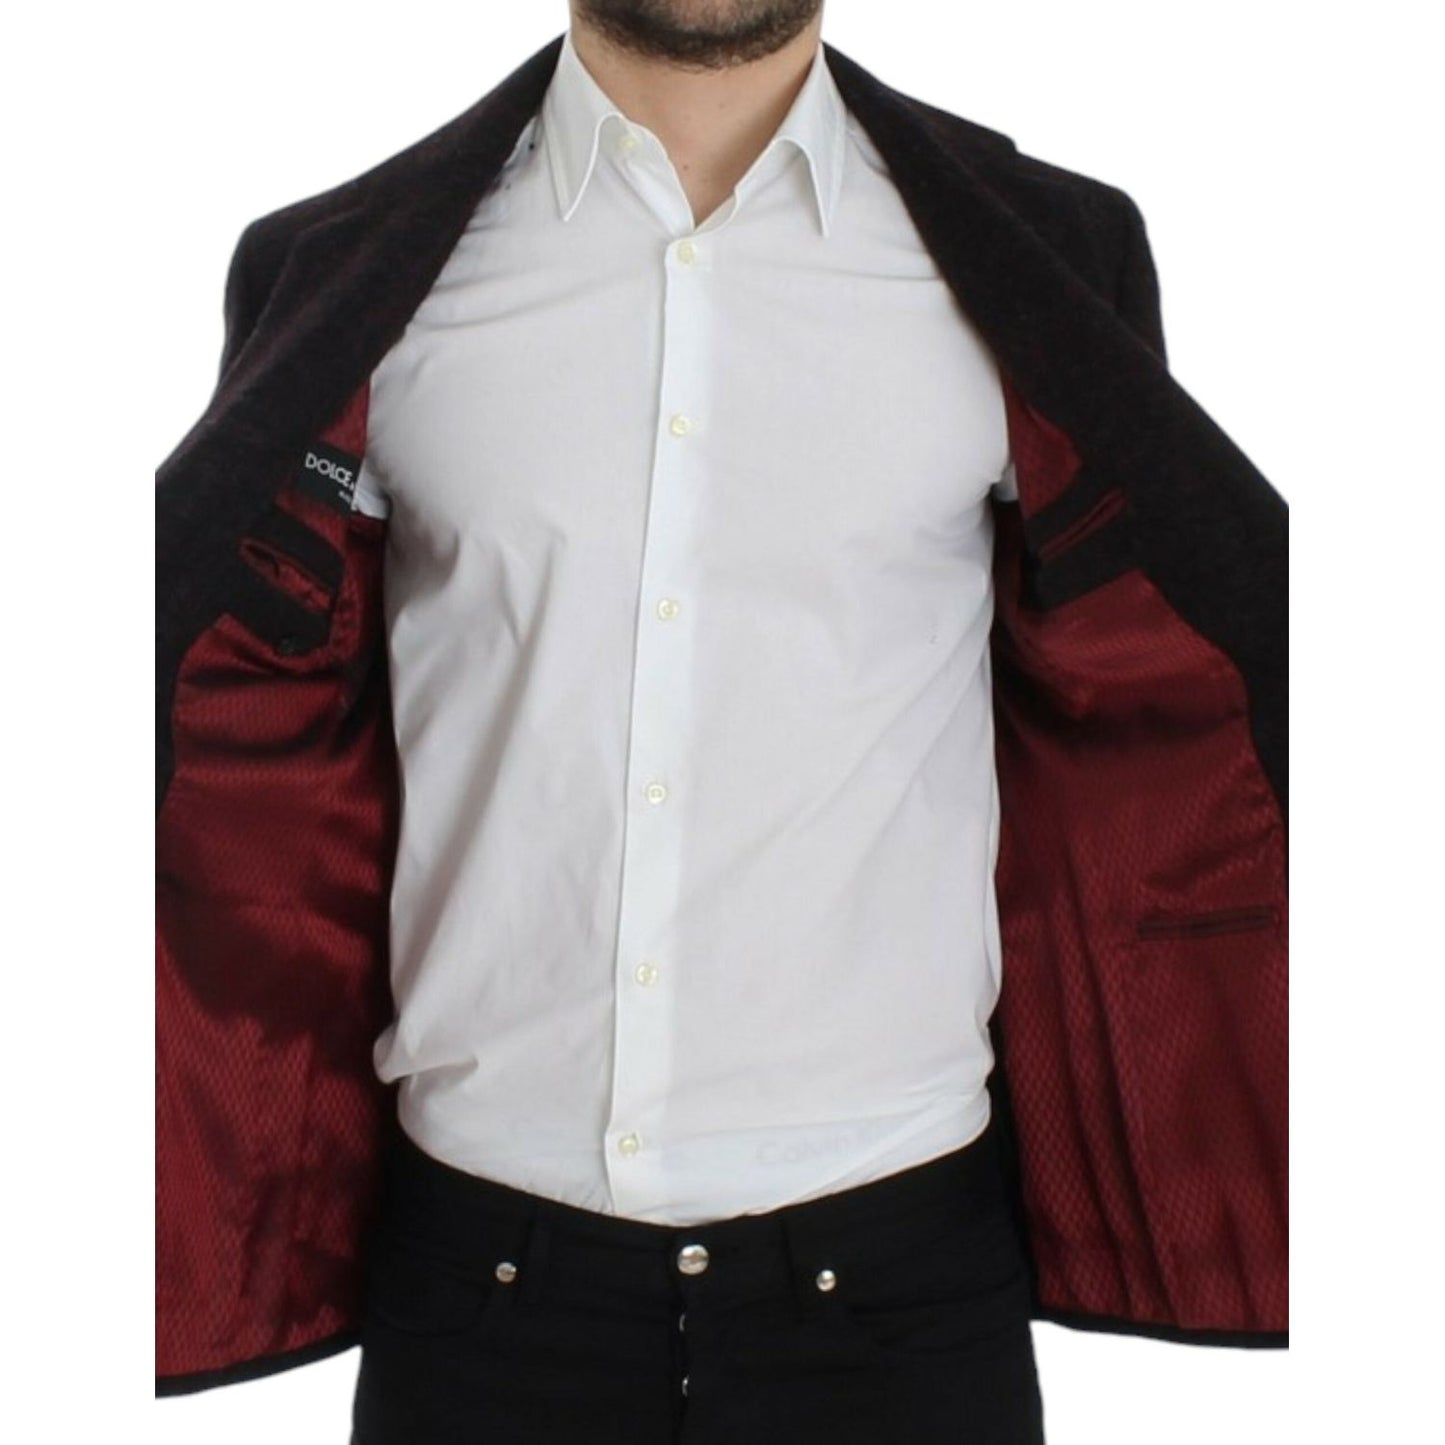 Dolce & Gabbana Bordeaux Alpaga Two-Button Blazer Jacket bordeaux-alpaga-two-button-blazer 12462-bordeaux-alpaga-two-button-blazer-6-scaled-e6ce2e9d-096.jpg